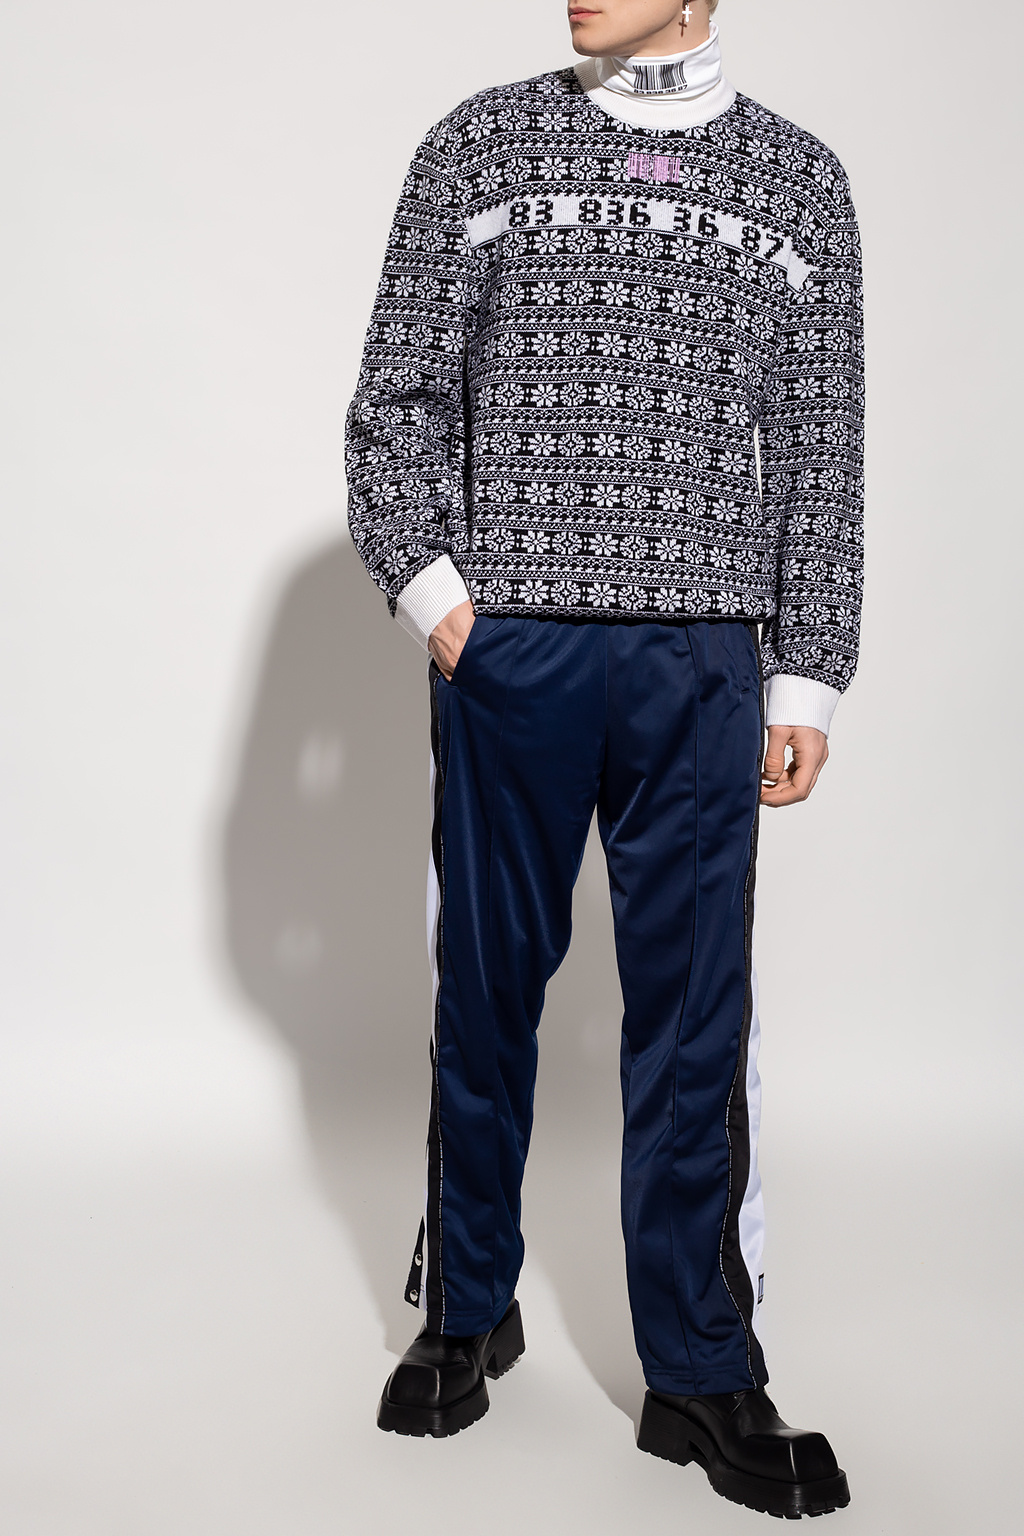 VTMNTS Patterned sweater | Men's Clothing | Vitkac